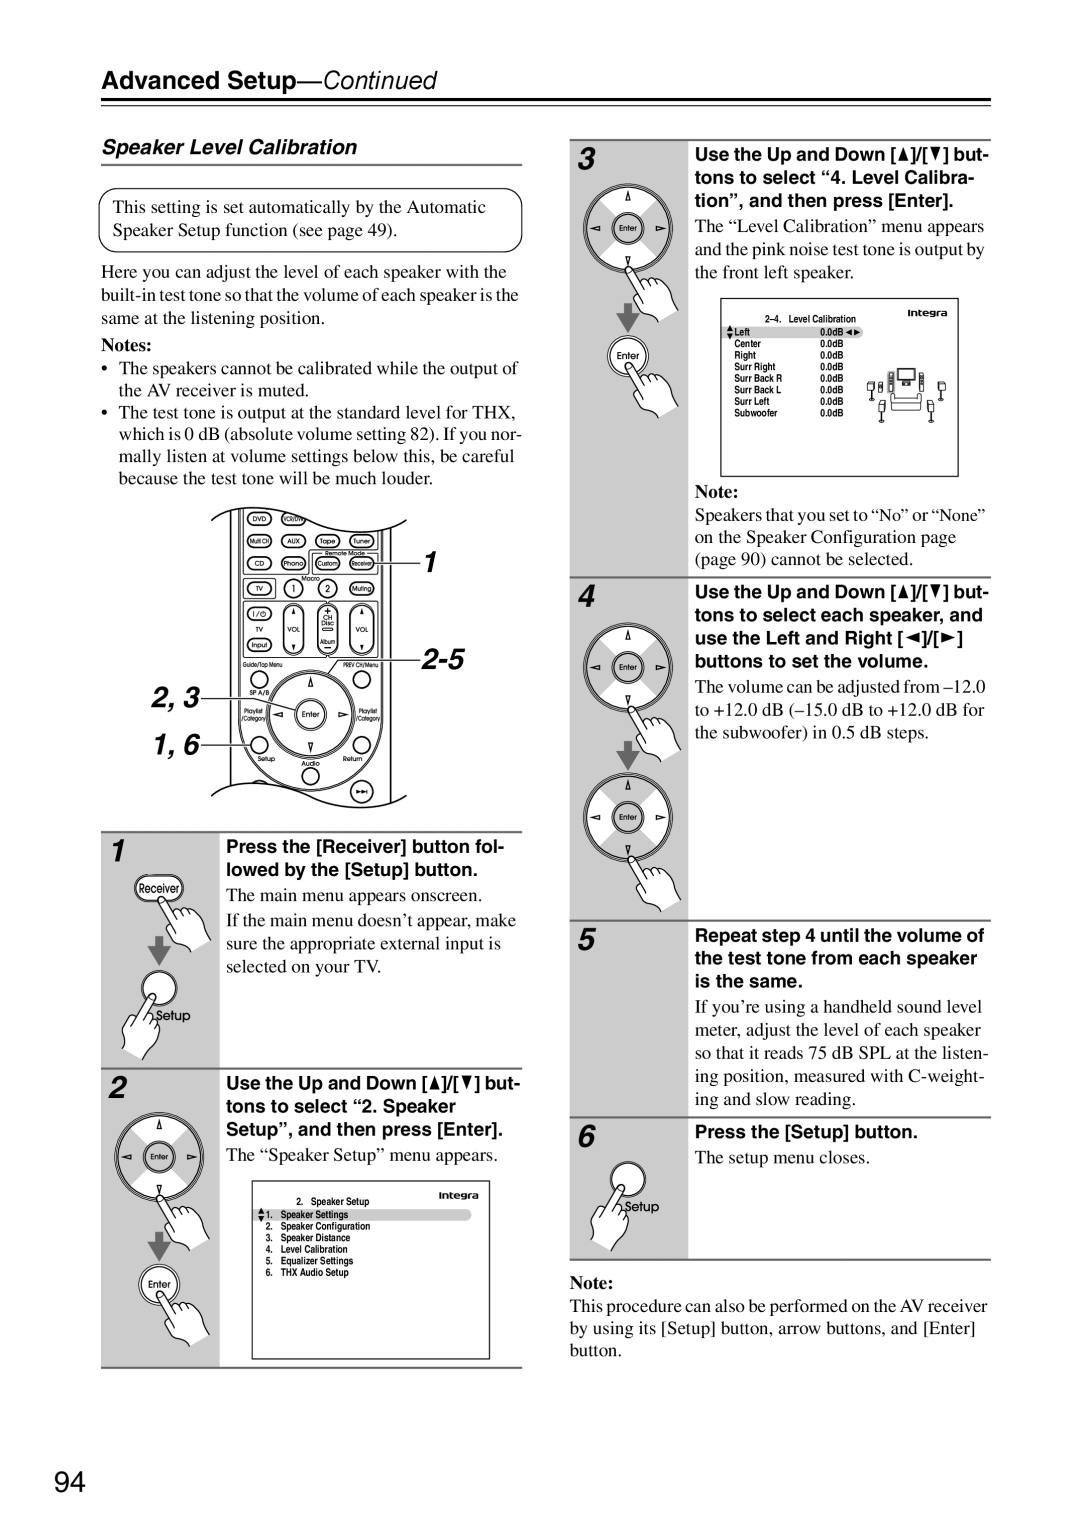 Onkyo DTR-7.9 instruction manual 1 2-52, 31, Speaker Level Calibration, Advanced Setup—Continued, Notes 